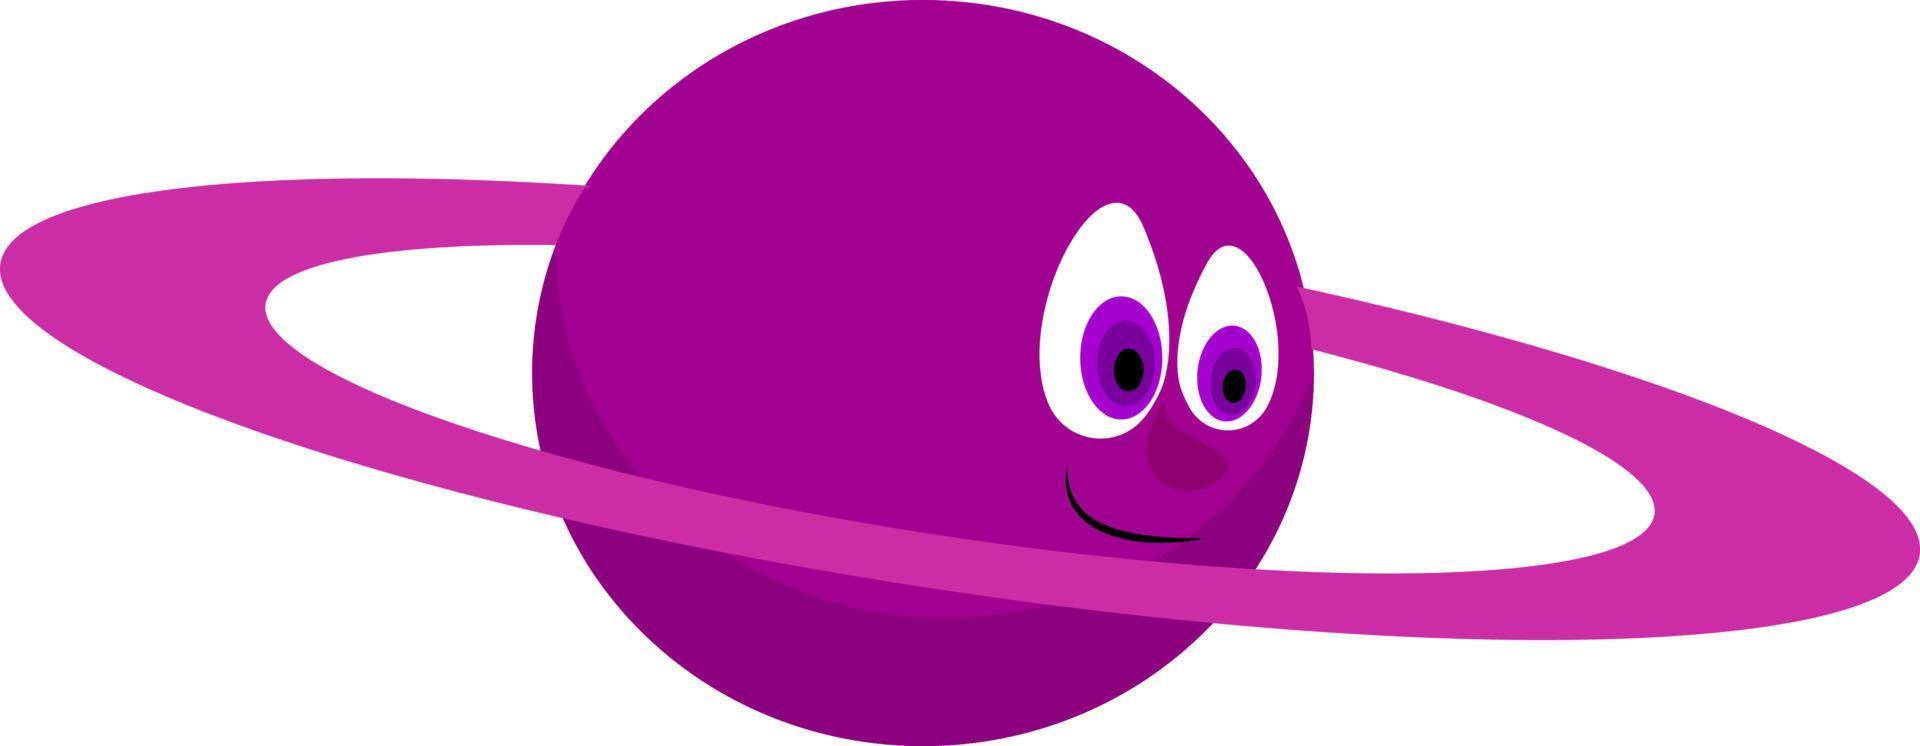 Purple planet, illustration, vector on white background.